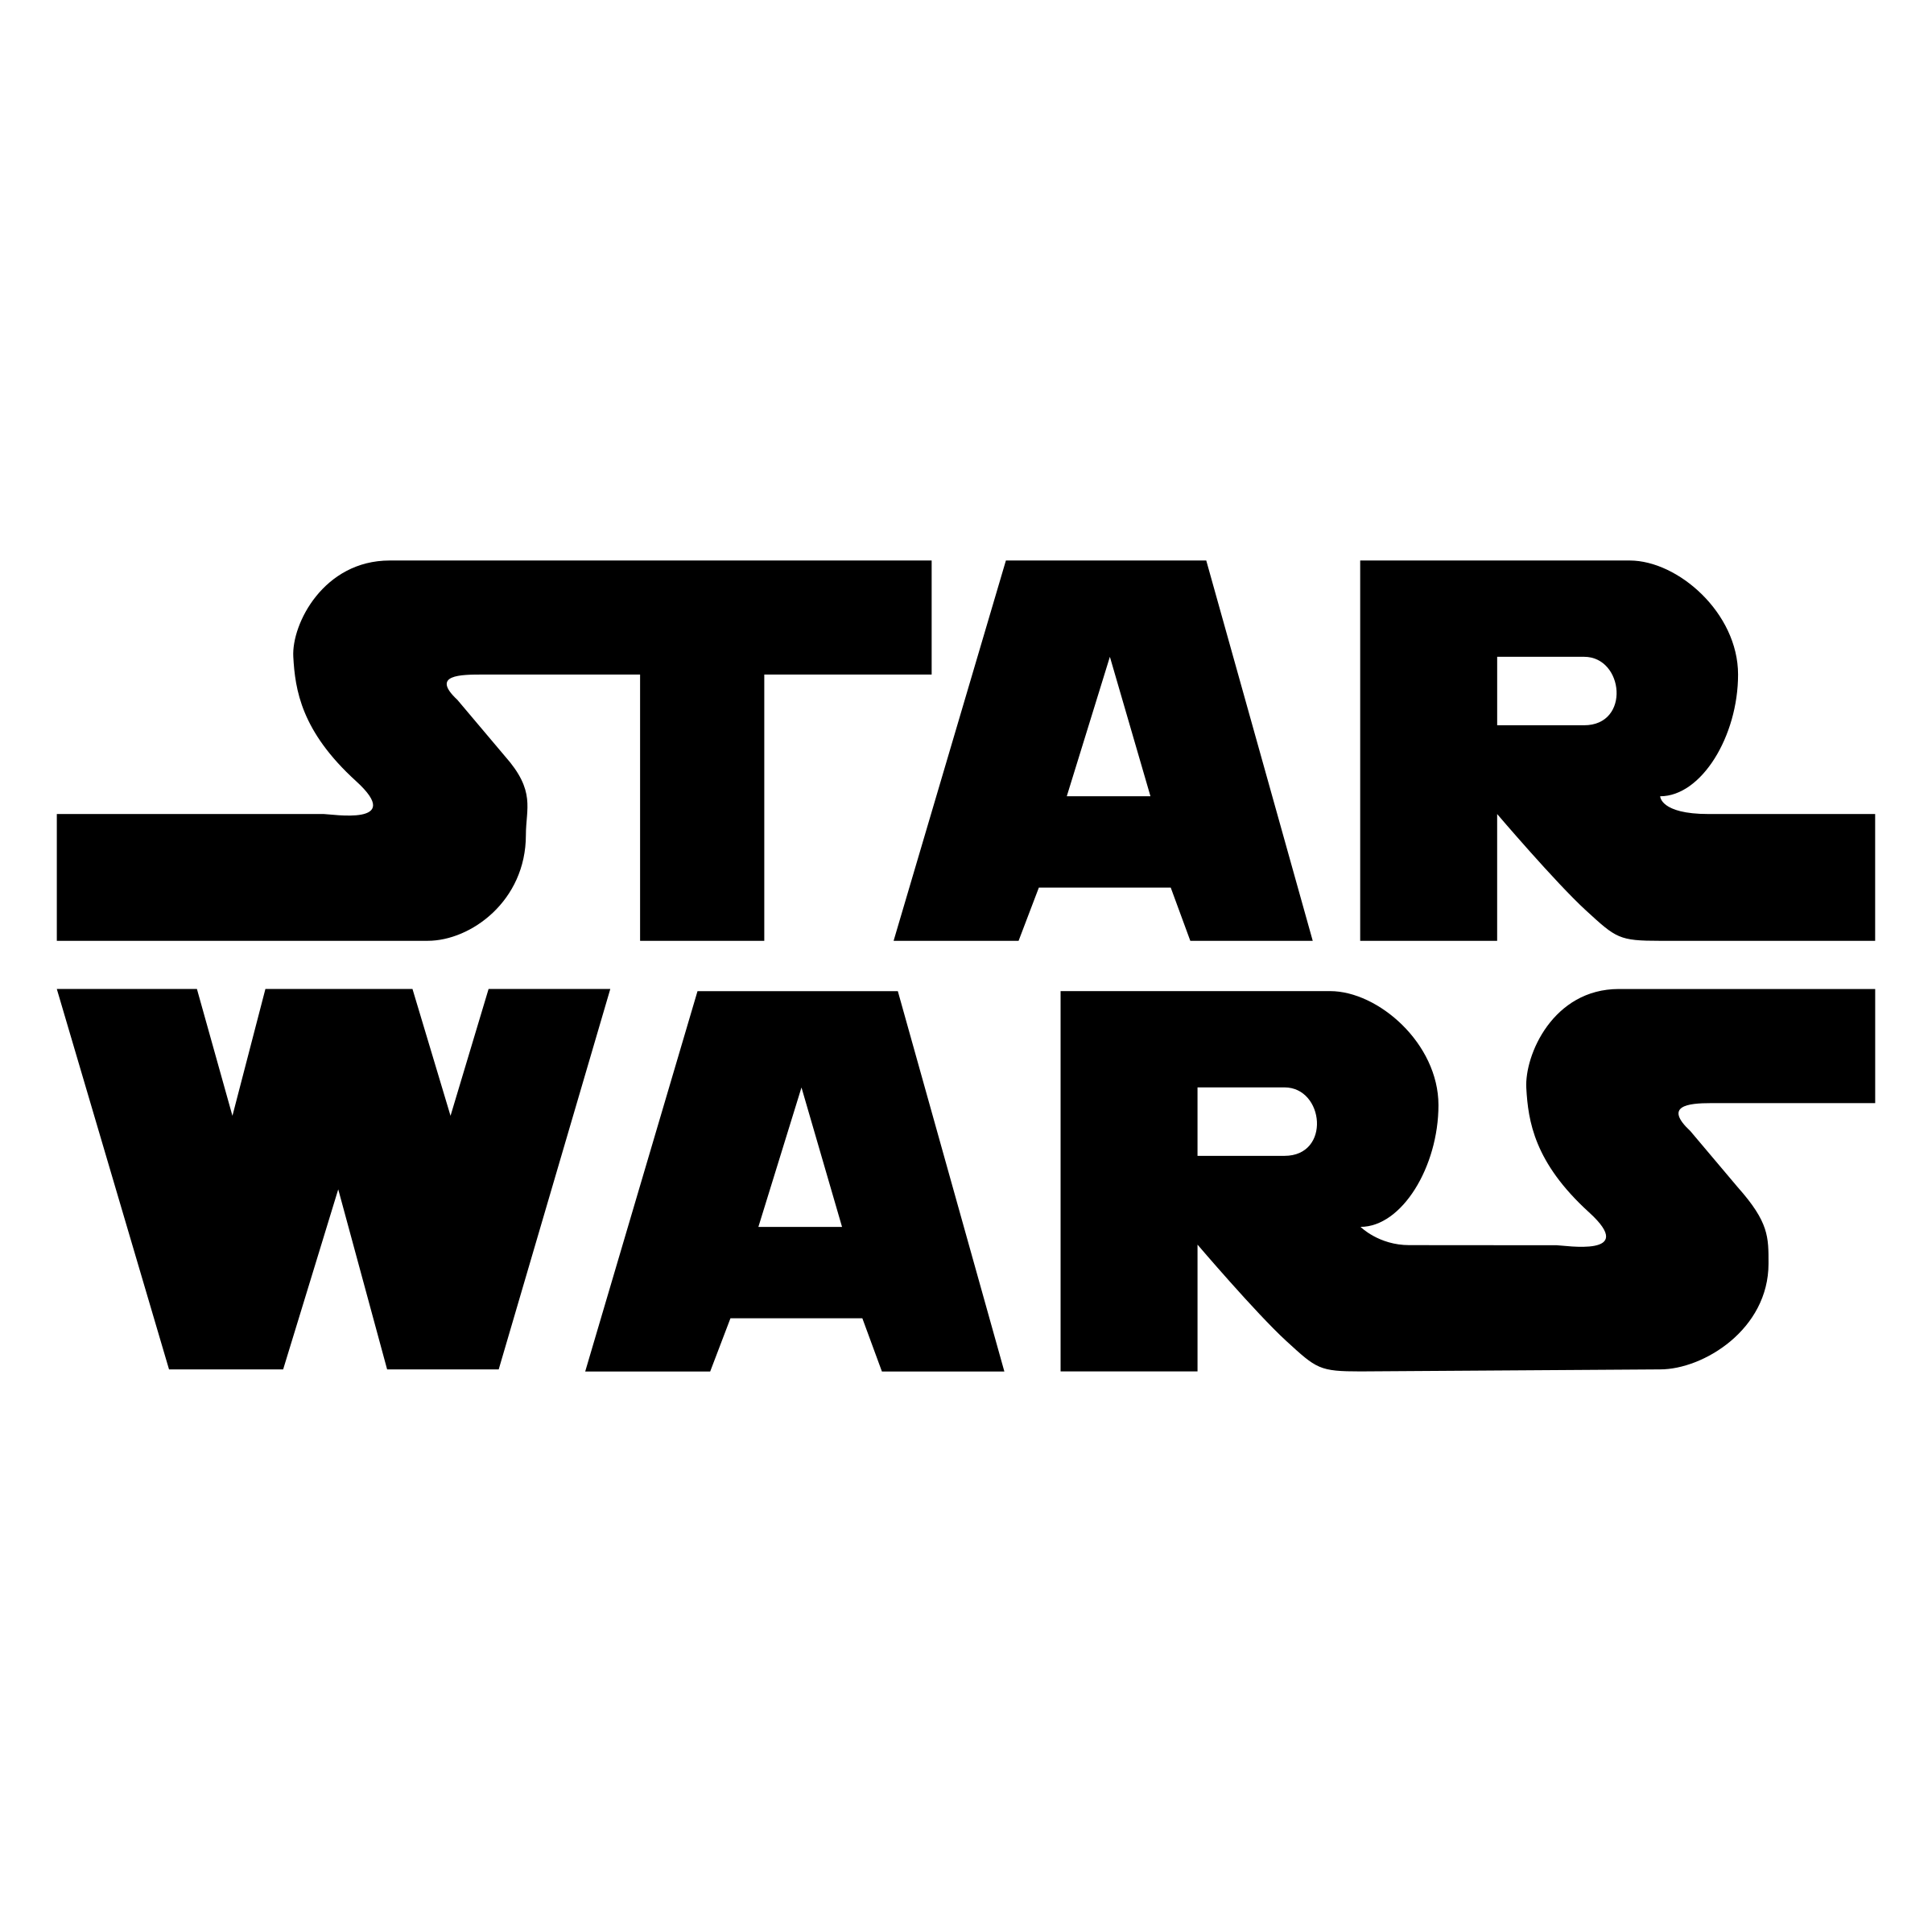 Star Wars Logo - Star Wars Logo PNG Transparent & SVG Vector - Freebie Supply